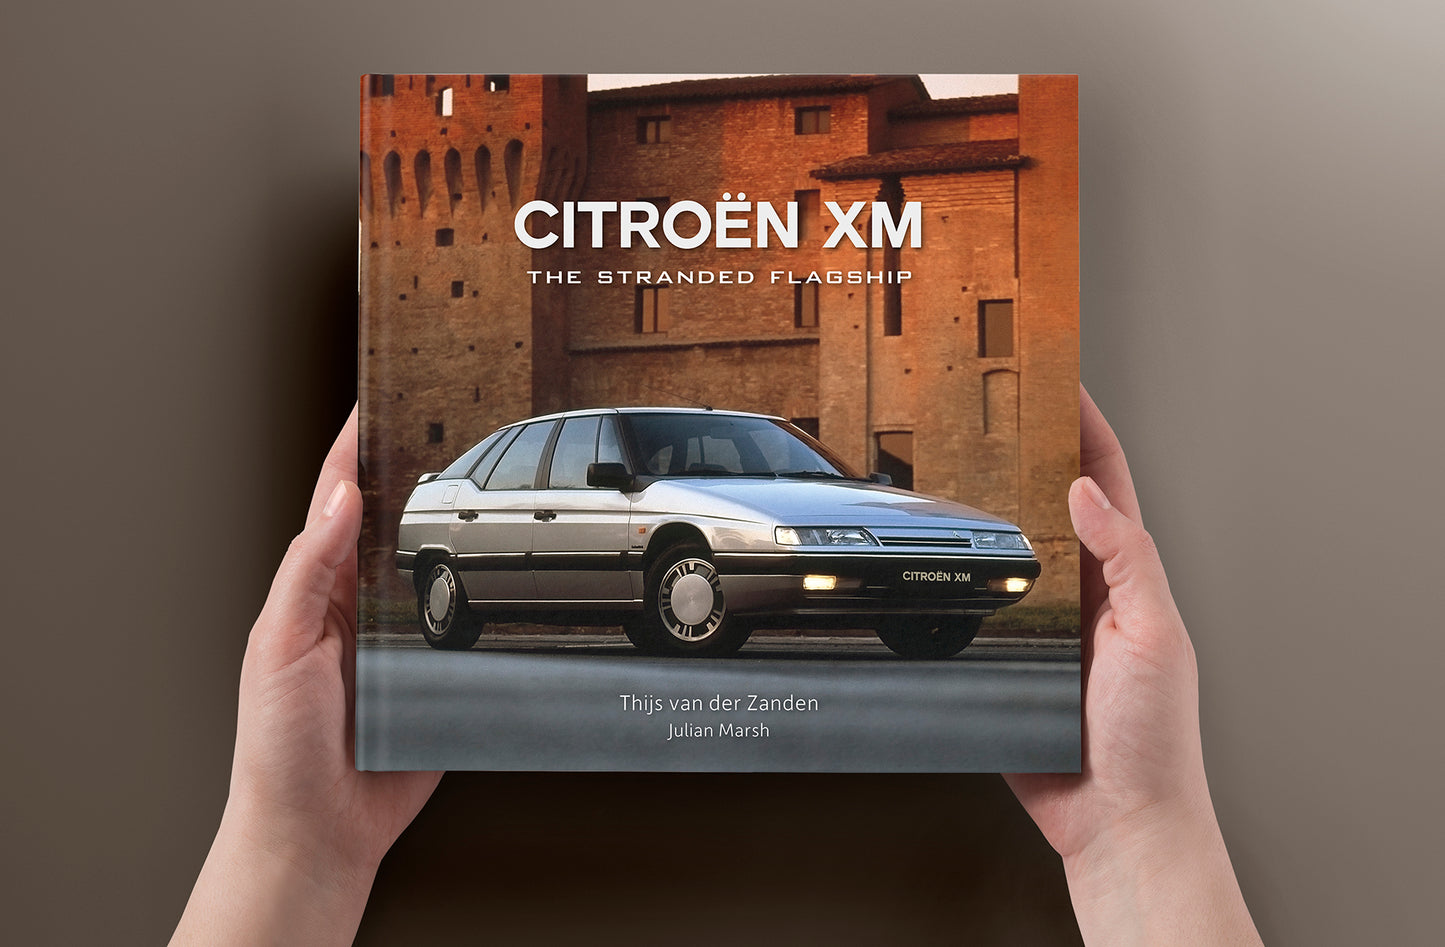 Citroën XM, the stranded flagship